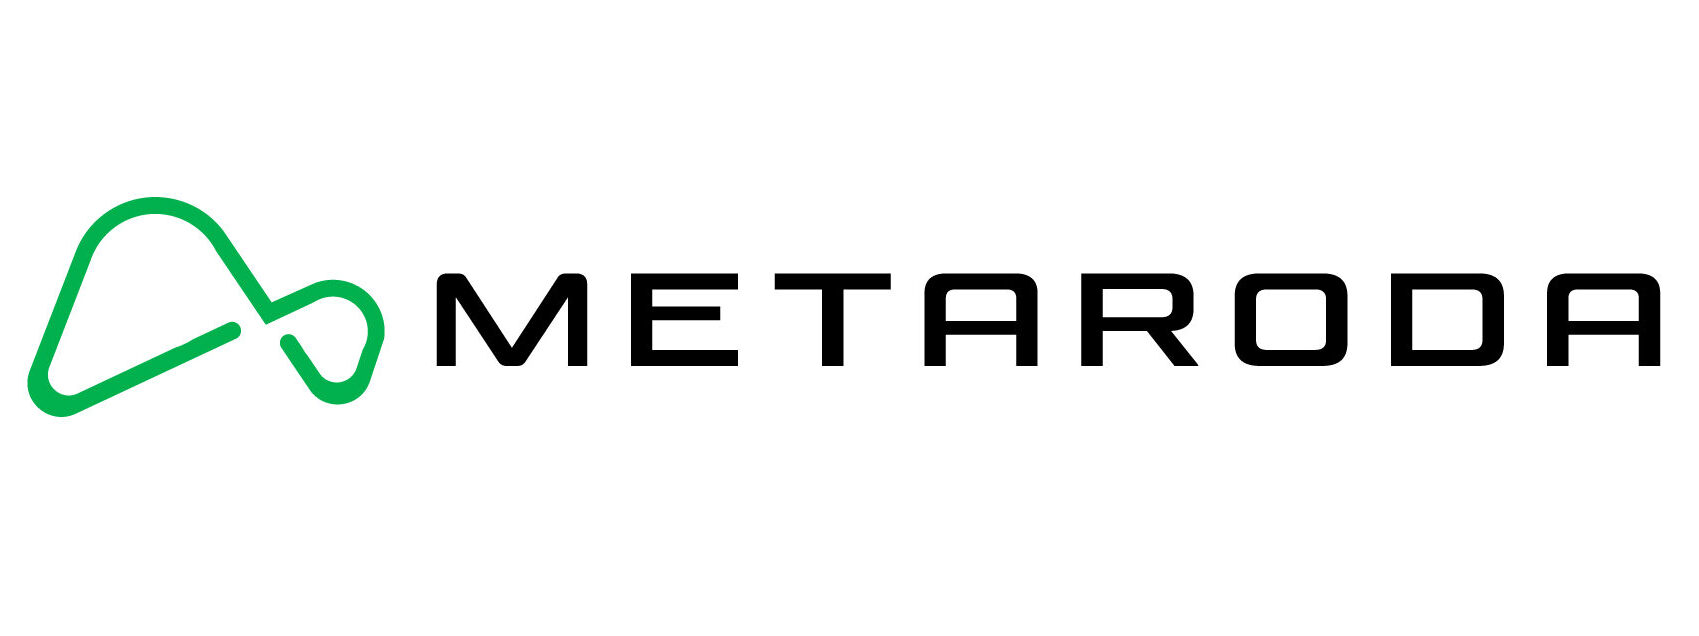 Metaroda Patent